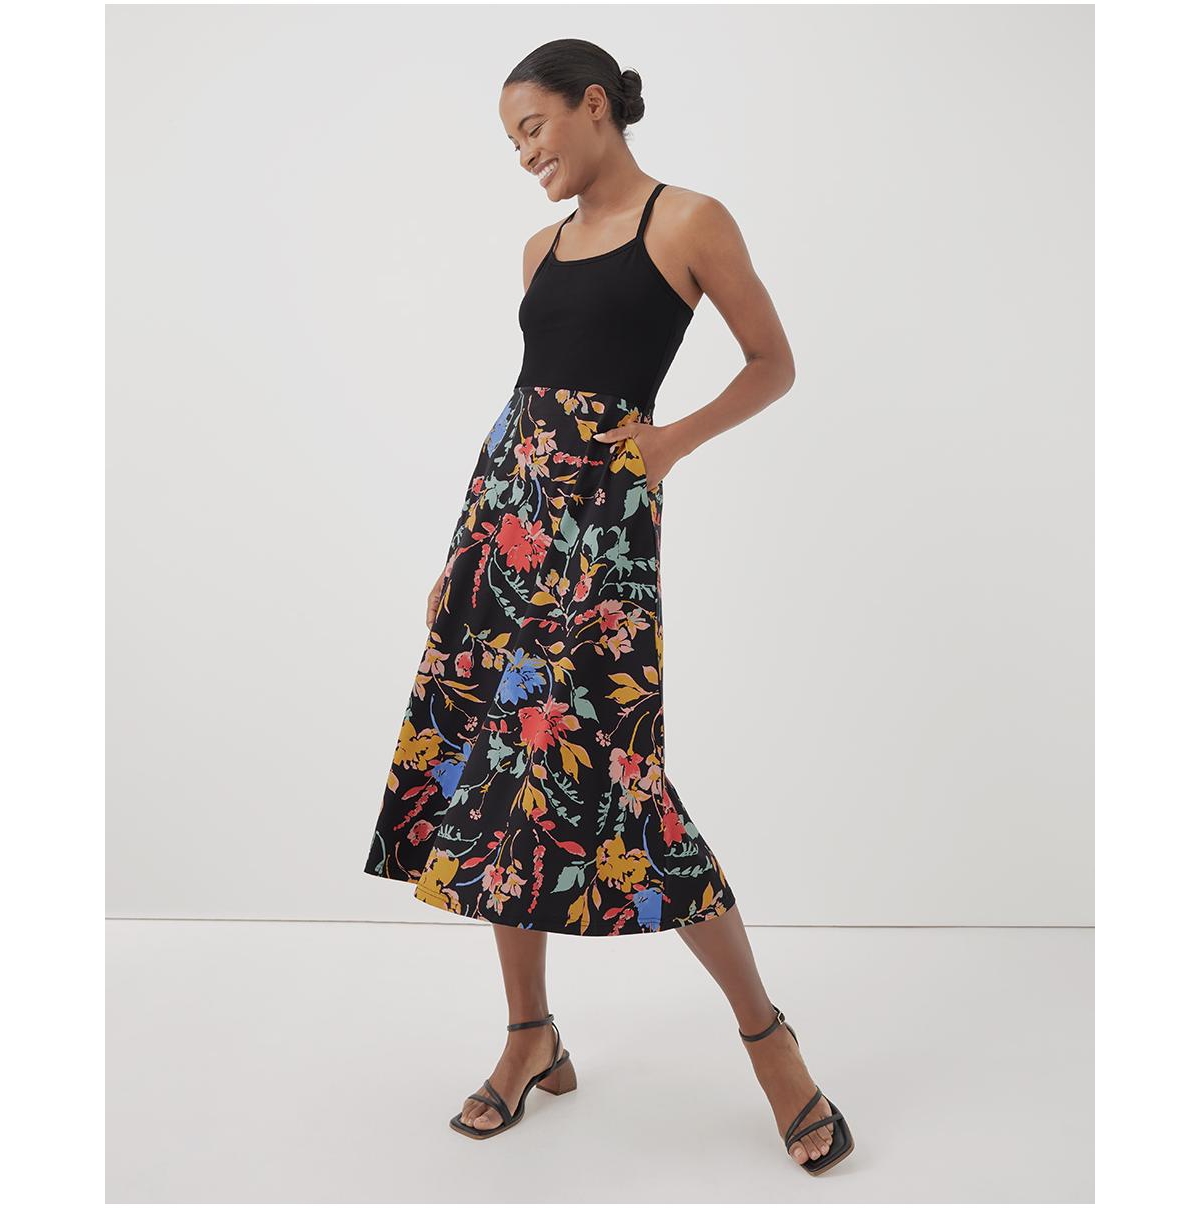 Women's Organic Cotton Fit & Flare Midi Dress - Shorty - Blocked nightfall blooms